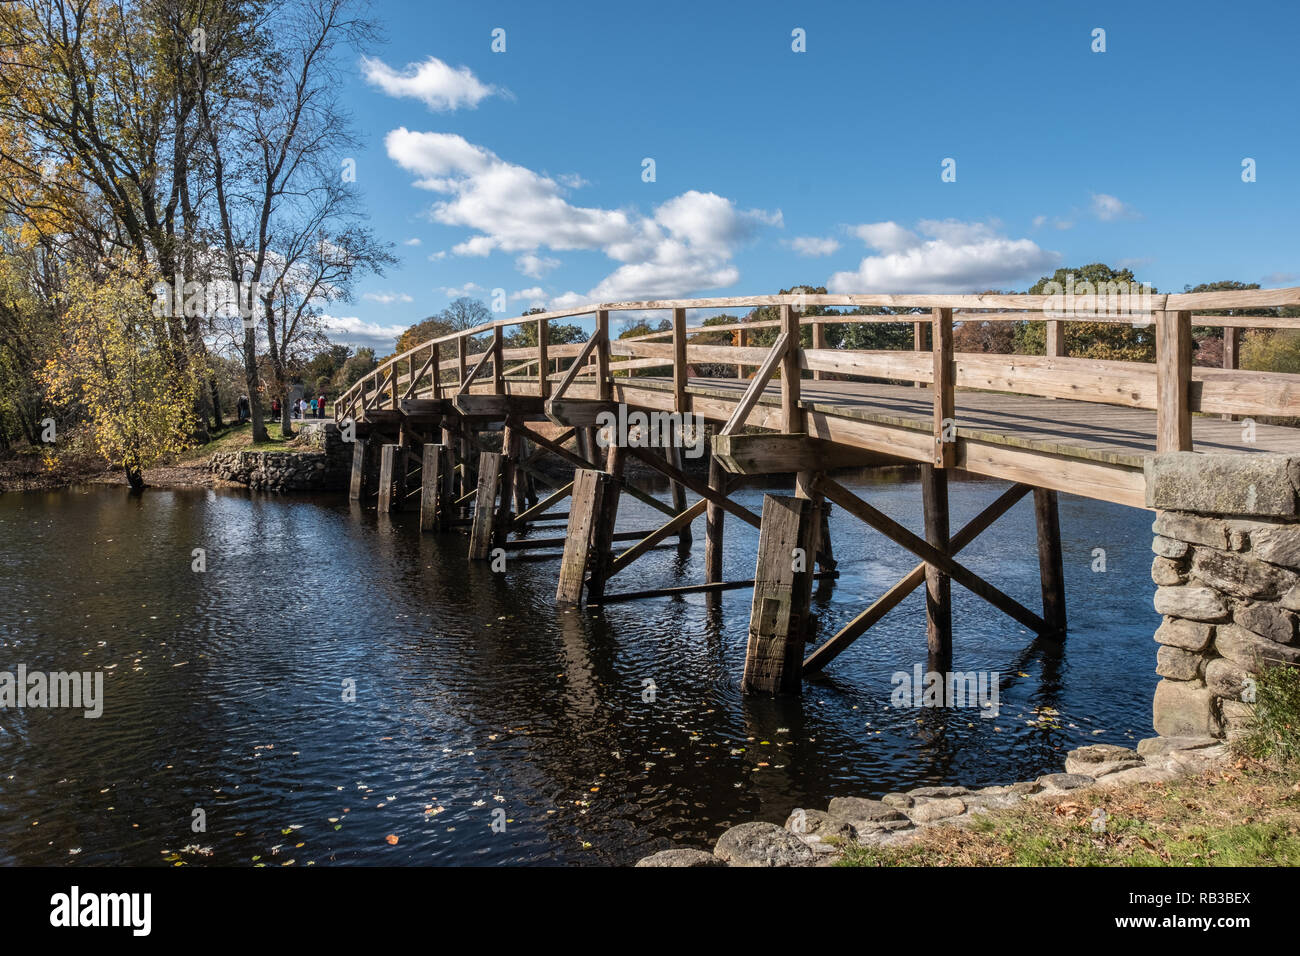 The Old North Bridge in Concord, Massachusetts Stock Photo